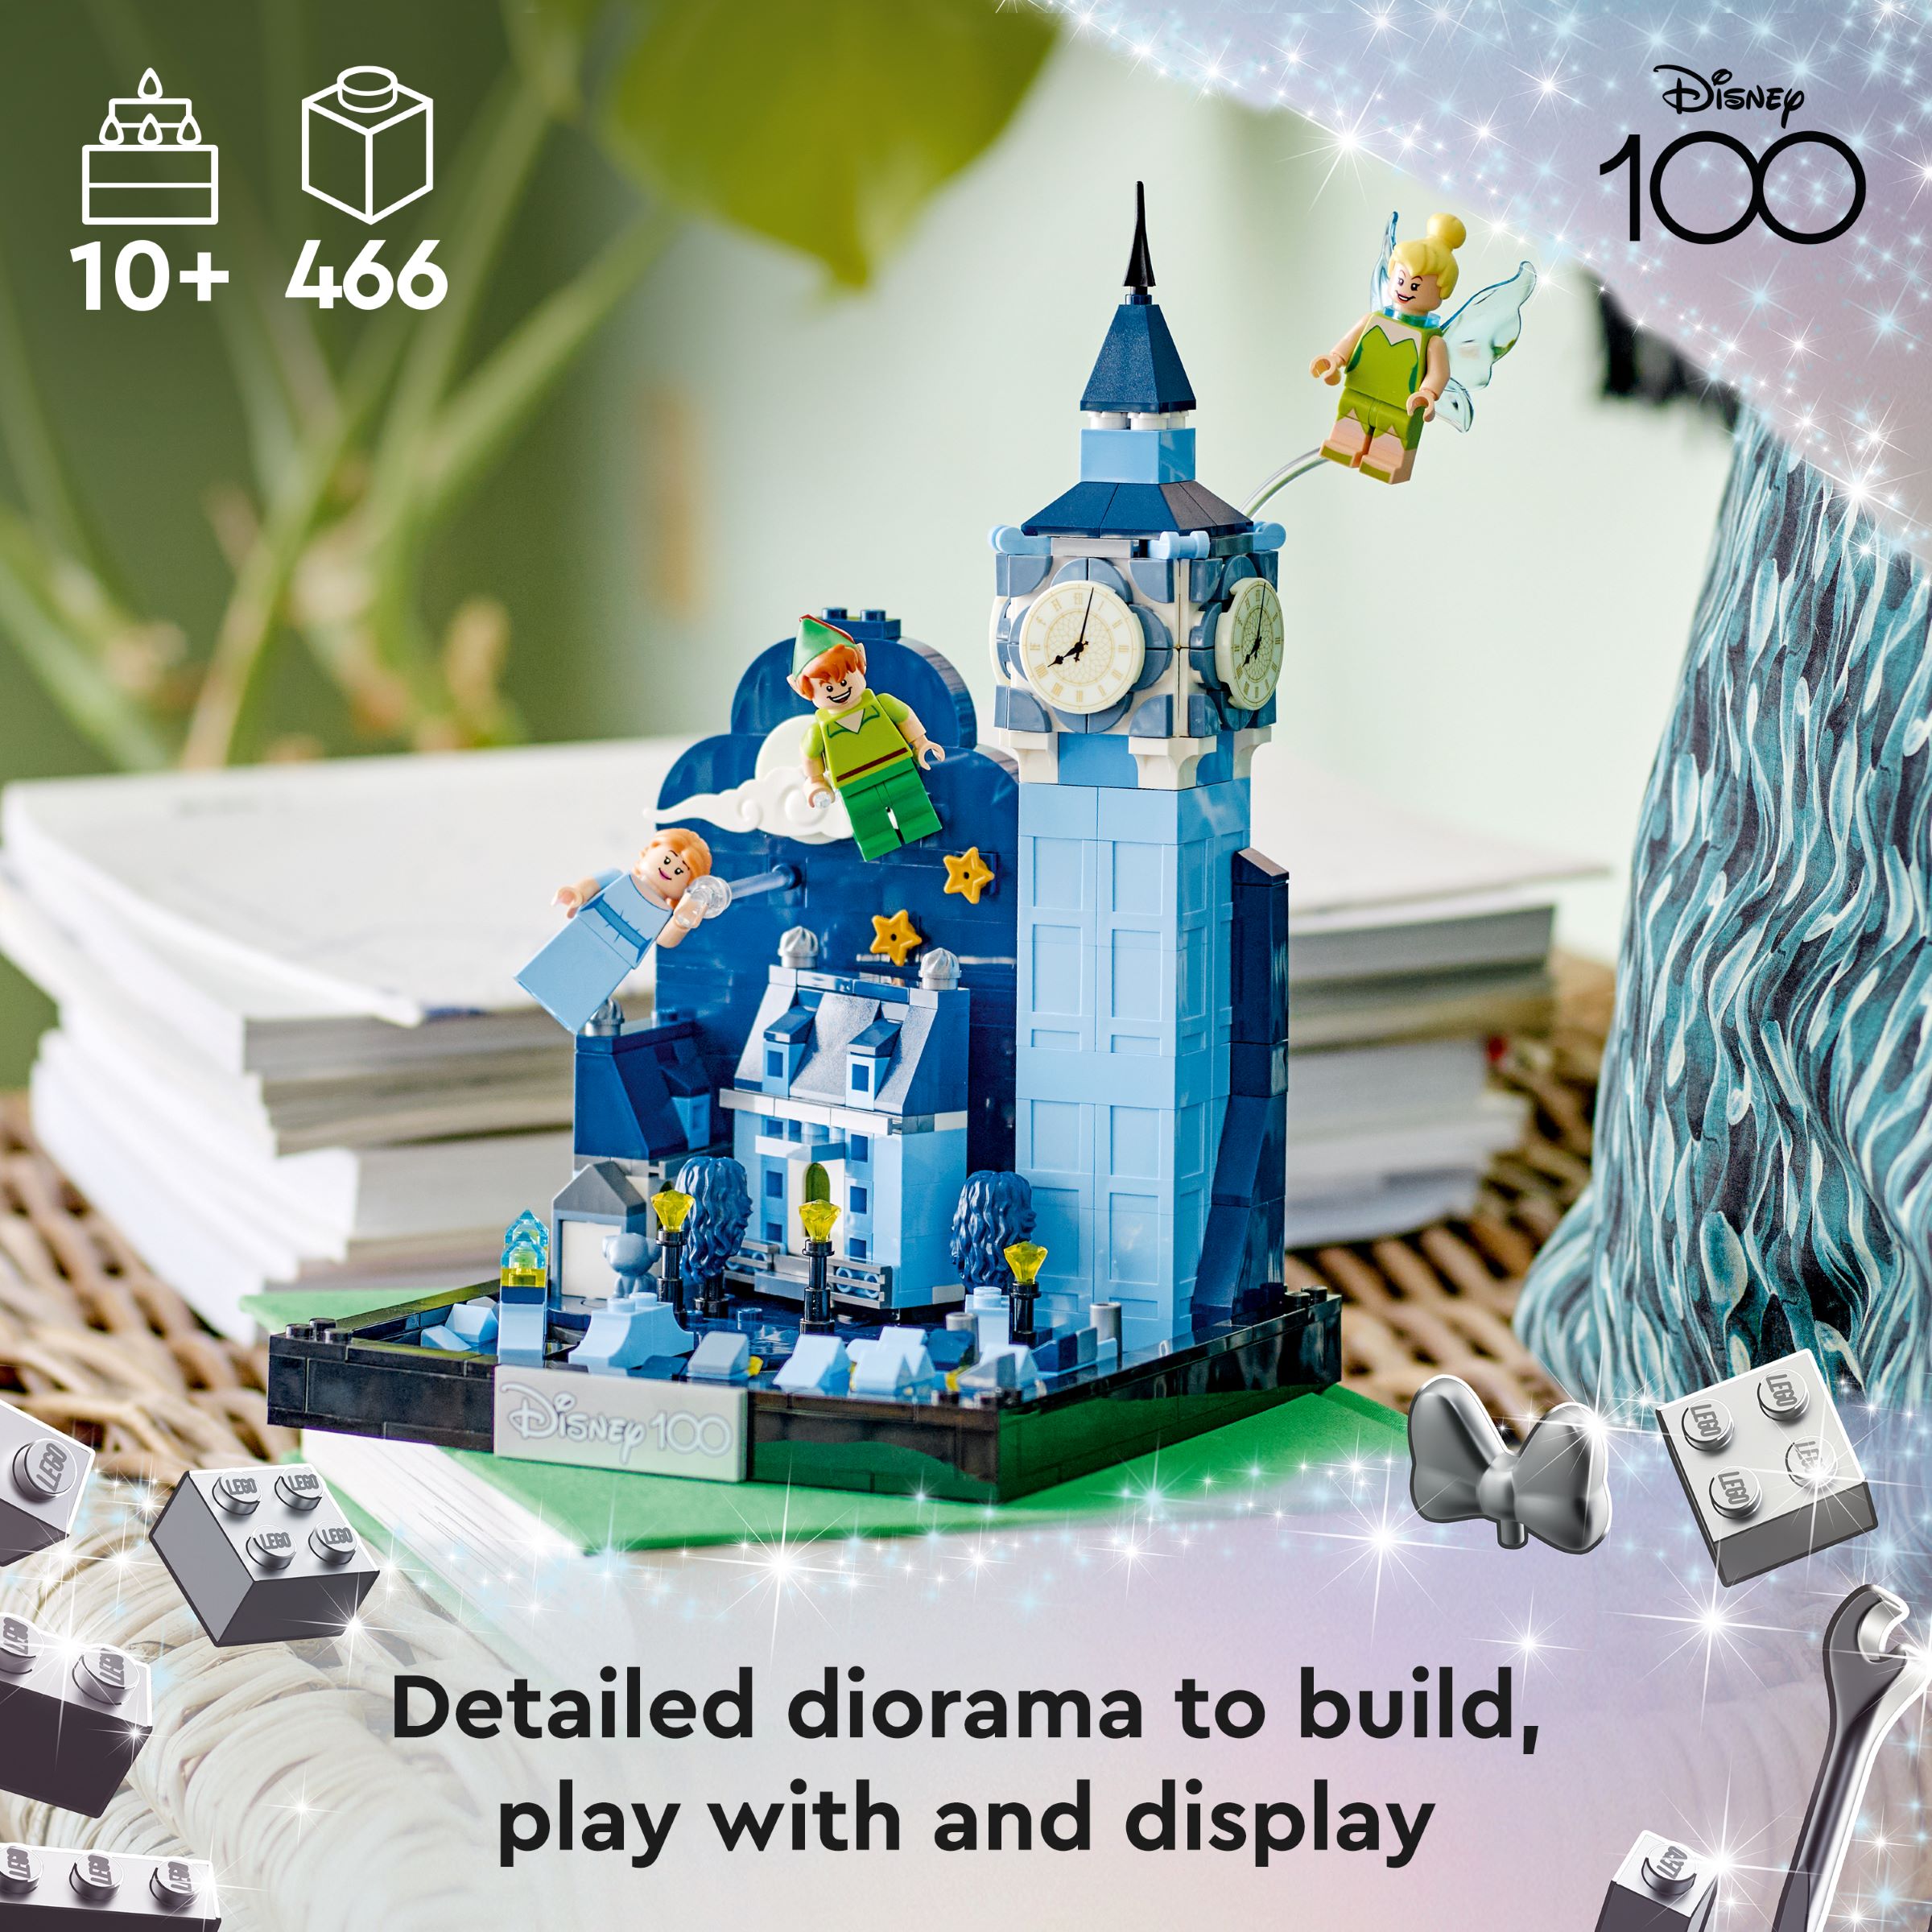 Peter Pan and Captain Hook  Disney lego sets, Lego minifigure display, Lego  craft